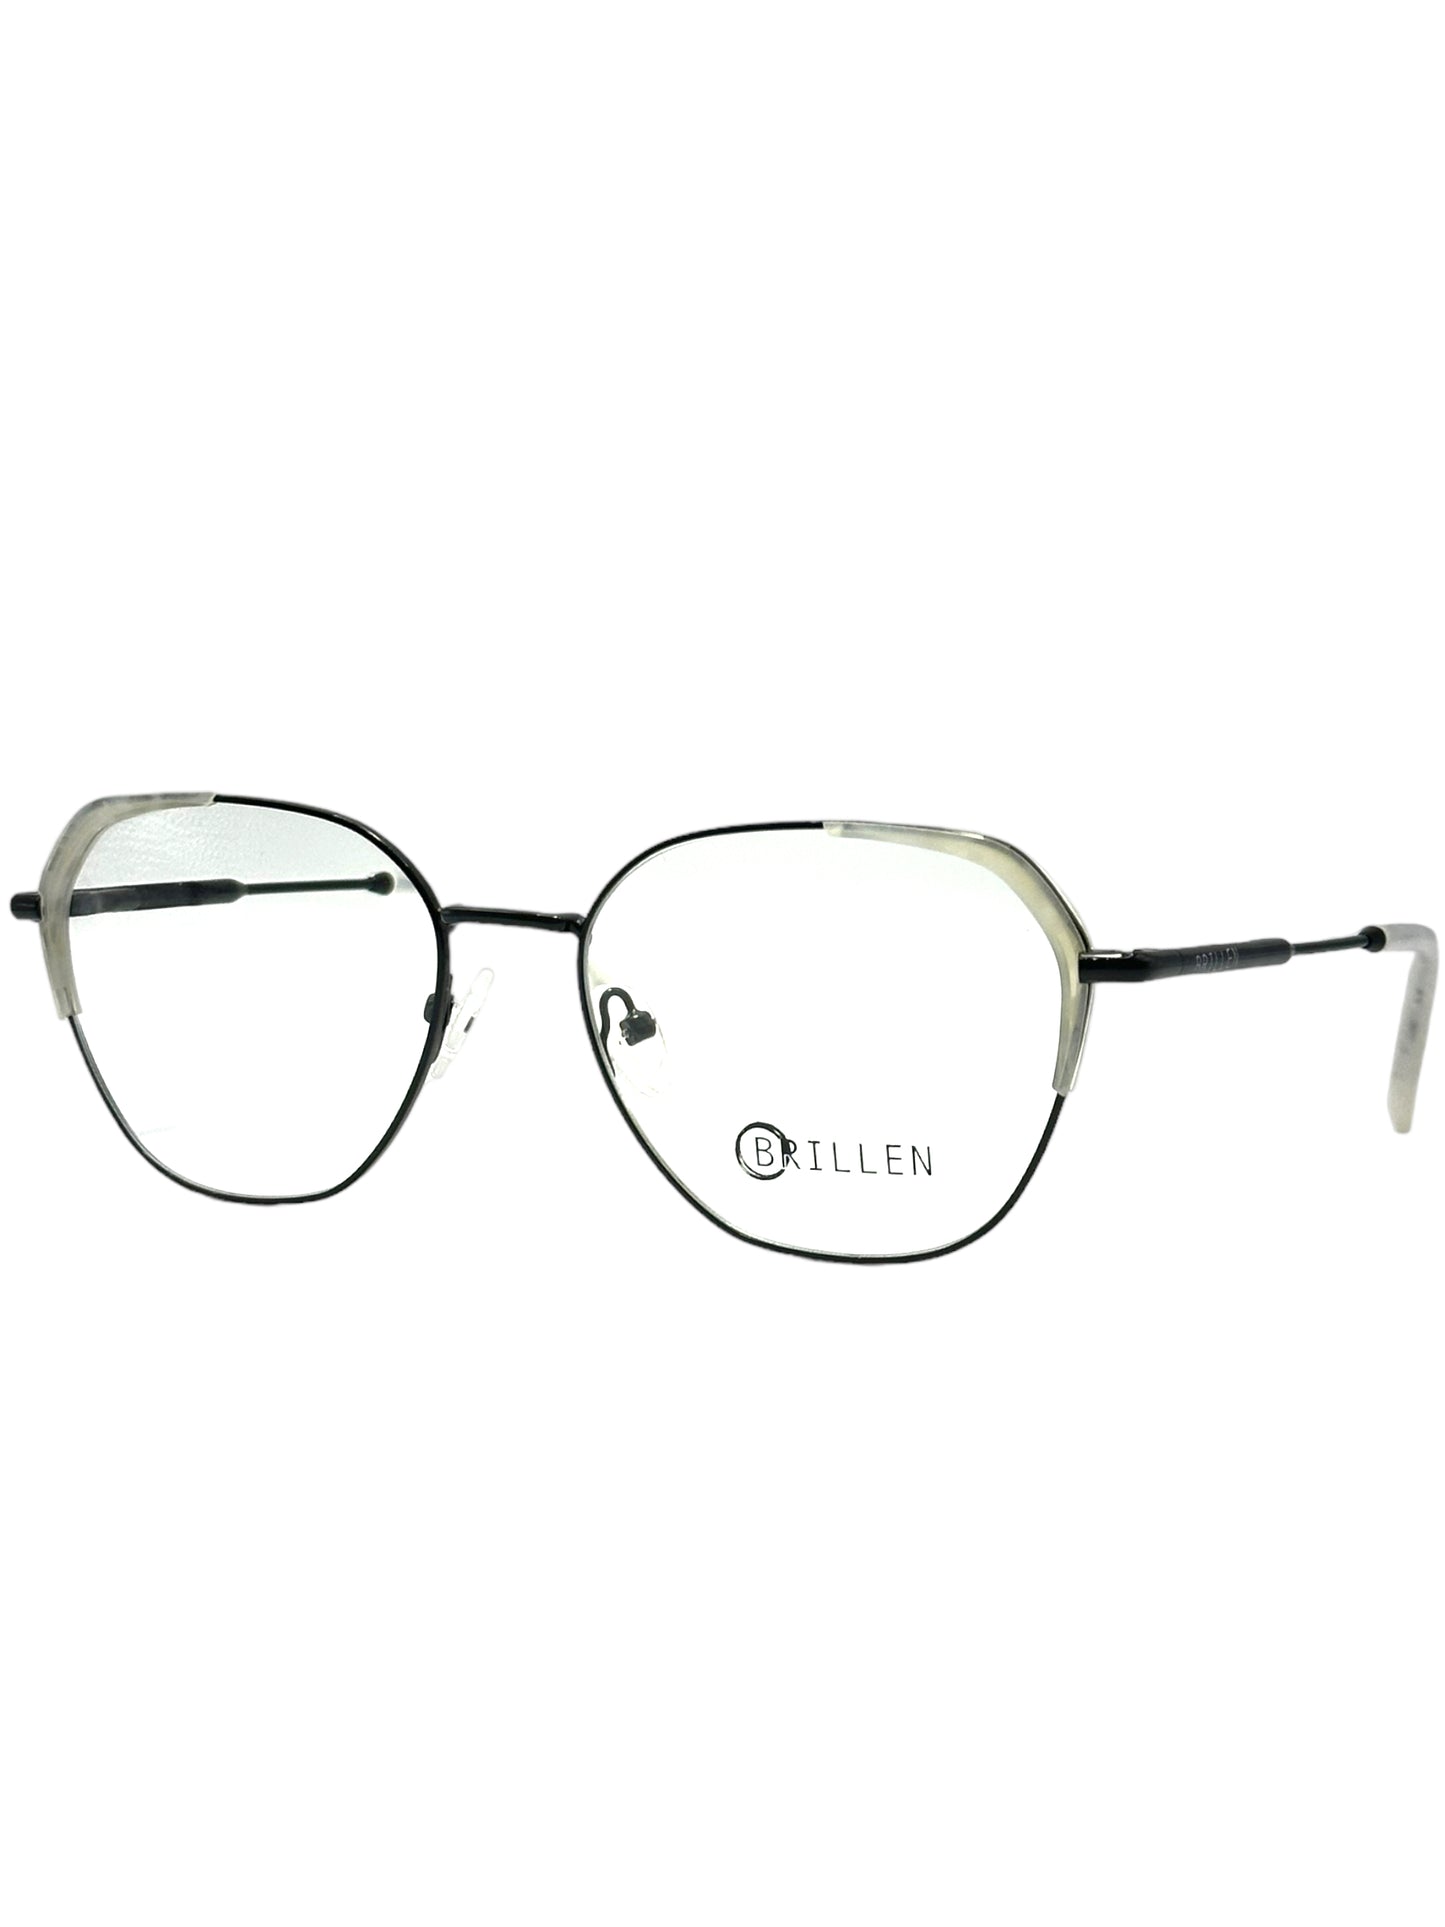 Brillen 18090 C3